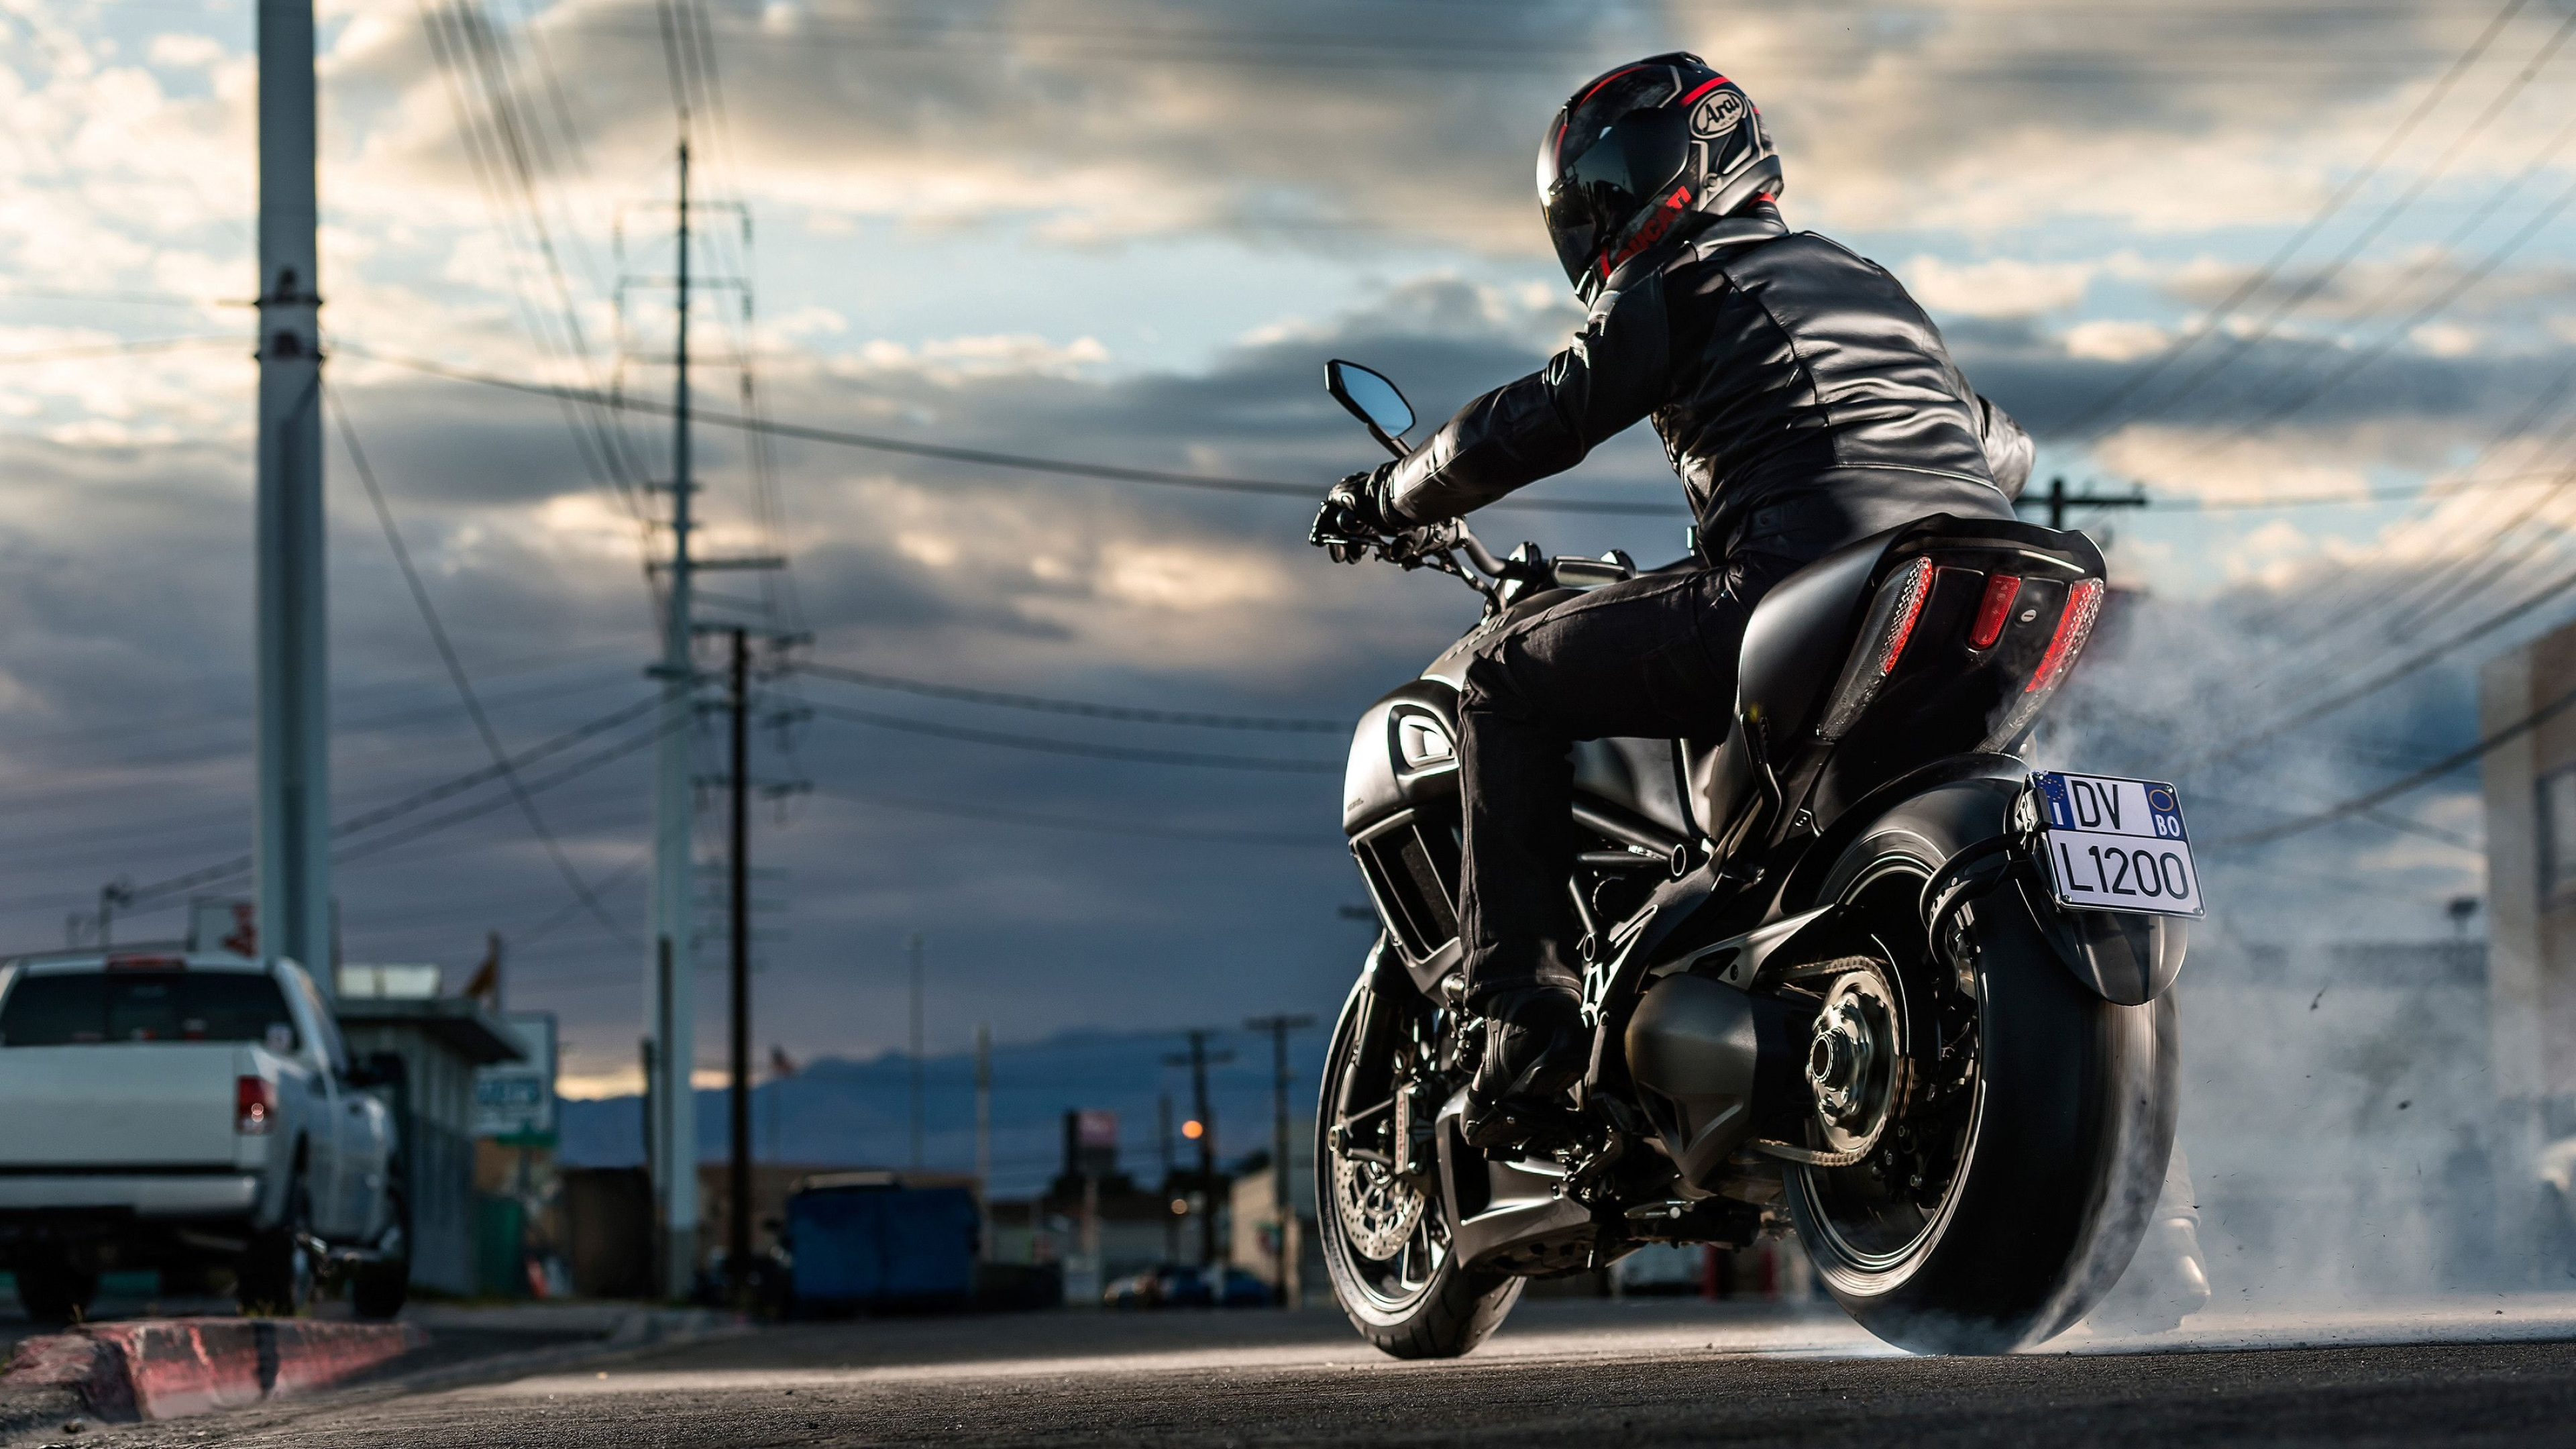 Street Bike, 4K motorcycle wallpapers, Speed and adrenaline, Thrilling rides, 3840x2160 4K Desktop